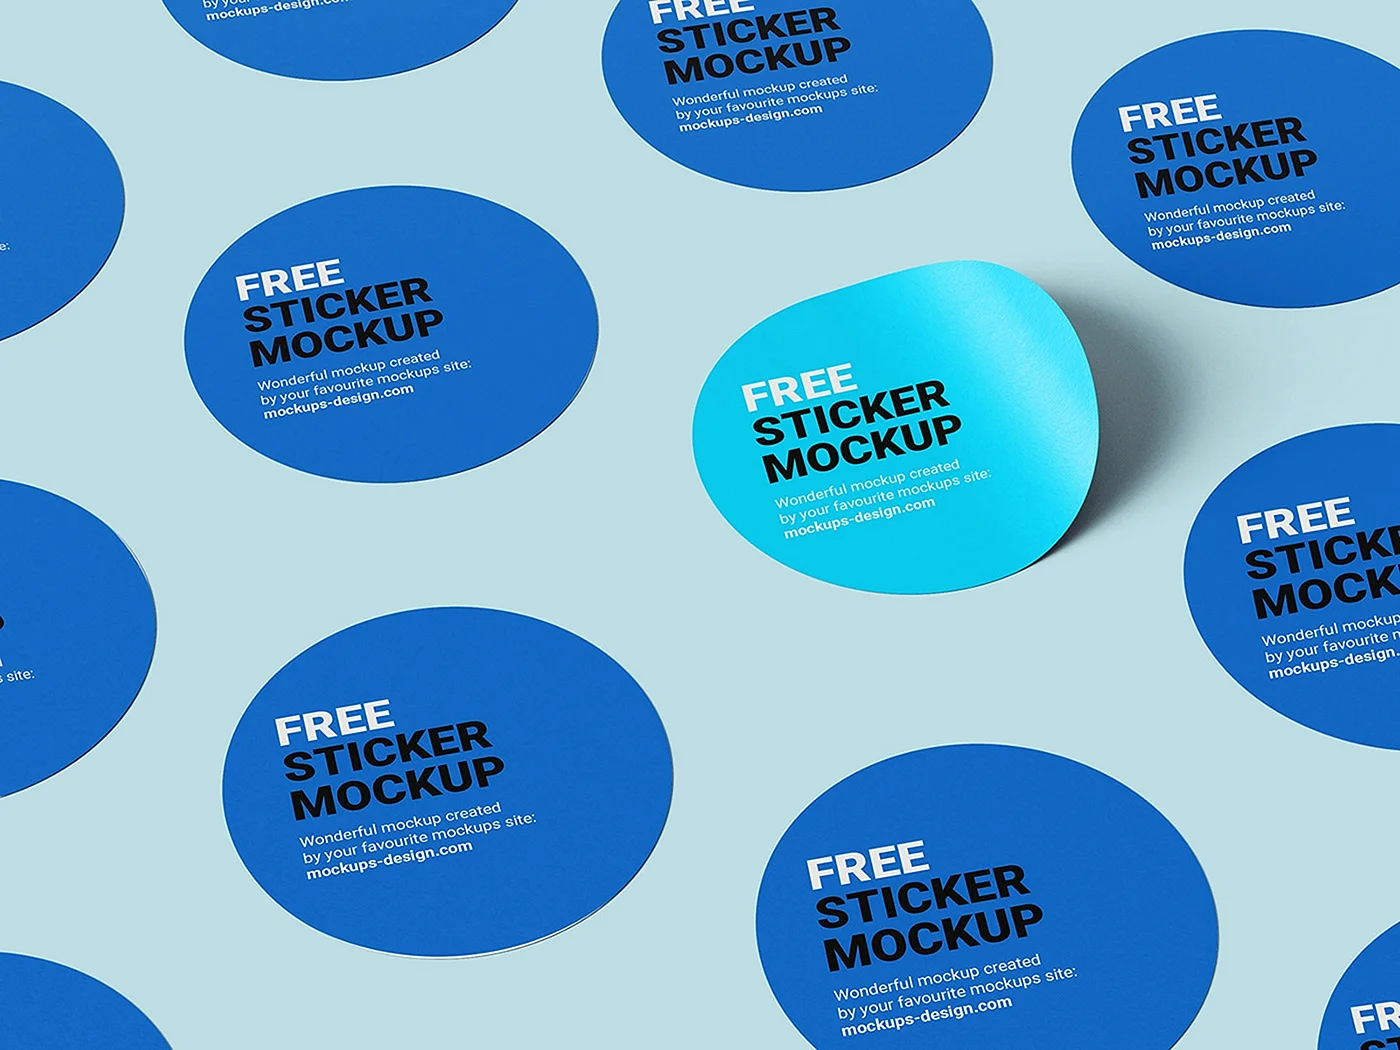 Sticker Mockup free